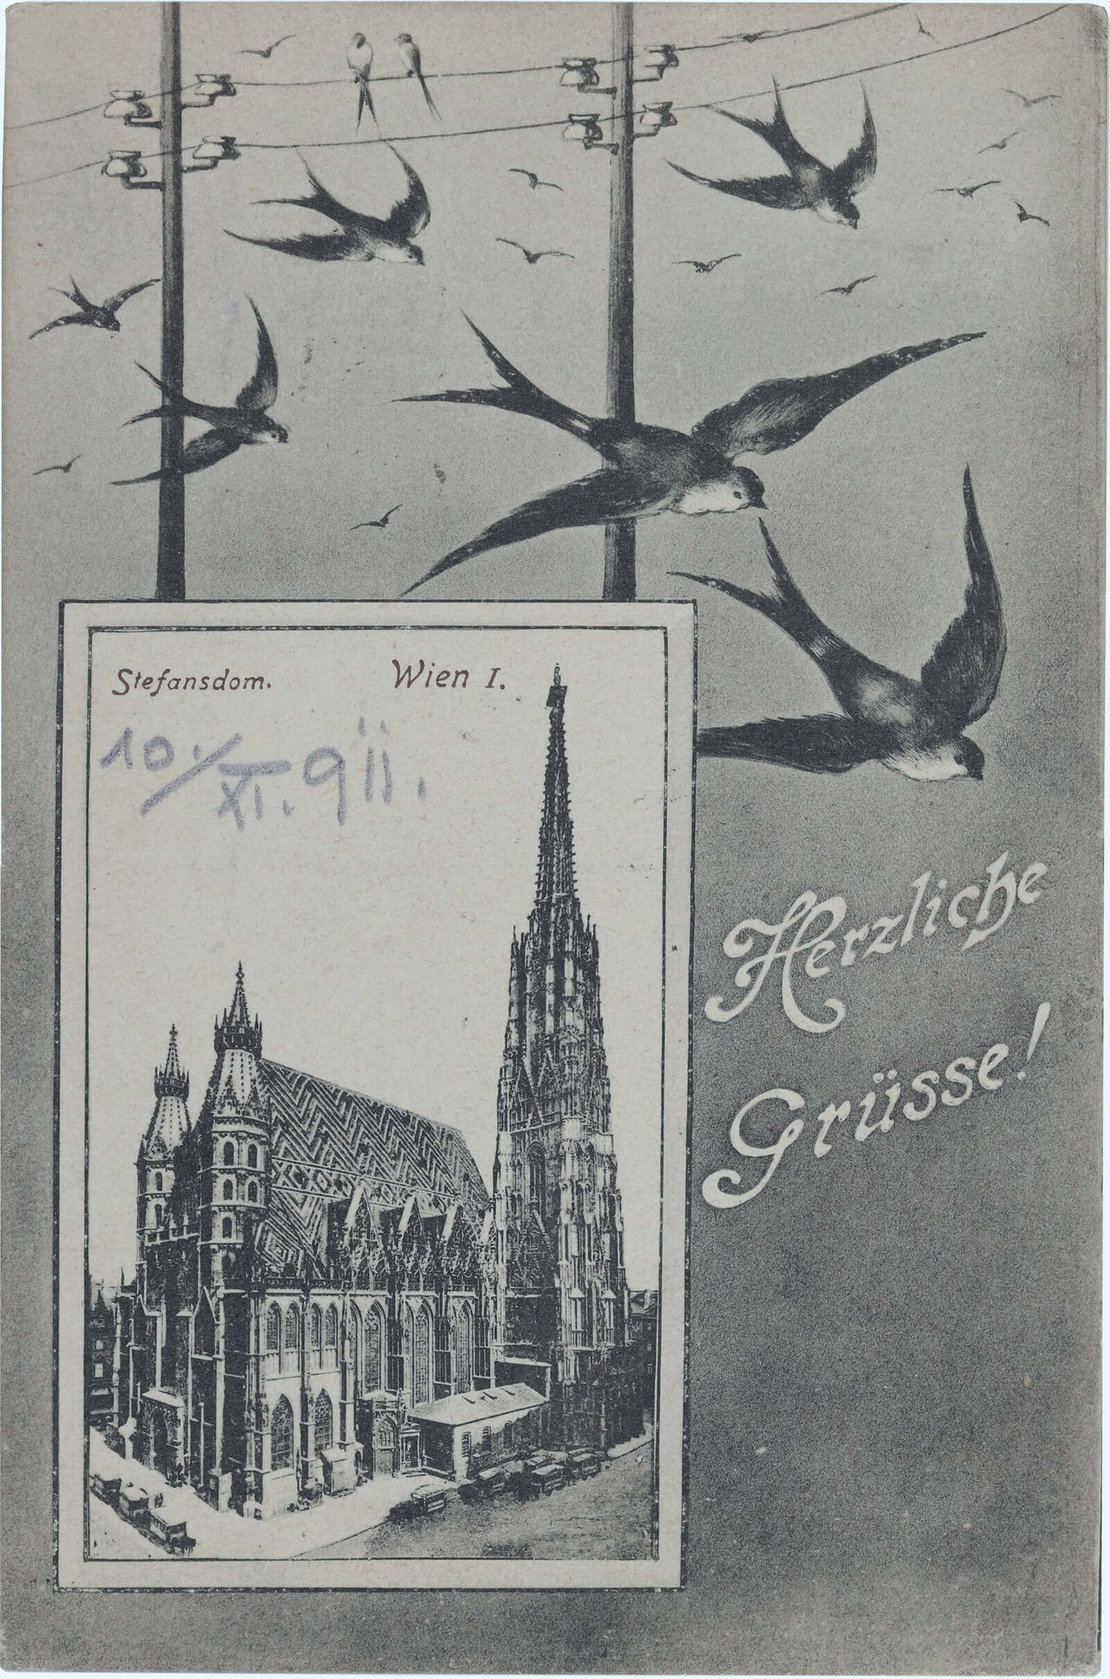 Ansichtskarte aus dem Verlag Paul Ledermann, Herstellung: 1908, Wien Museum 